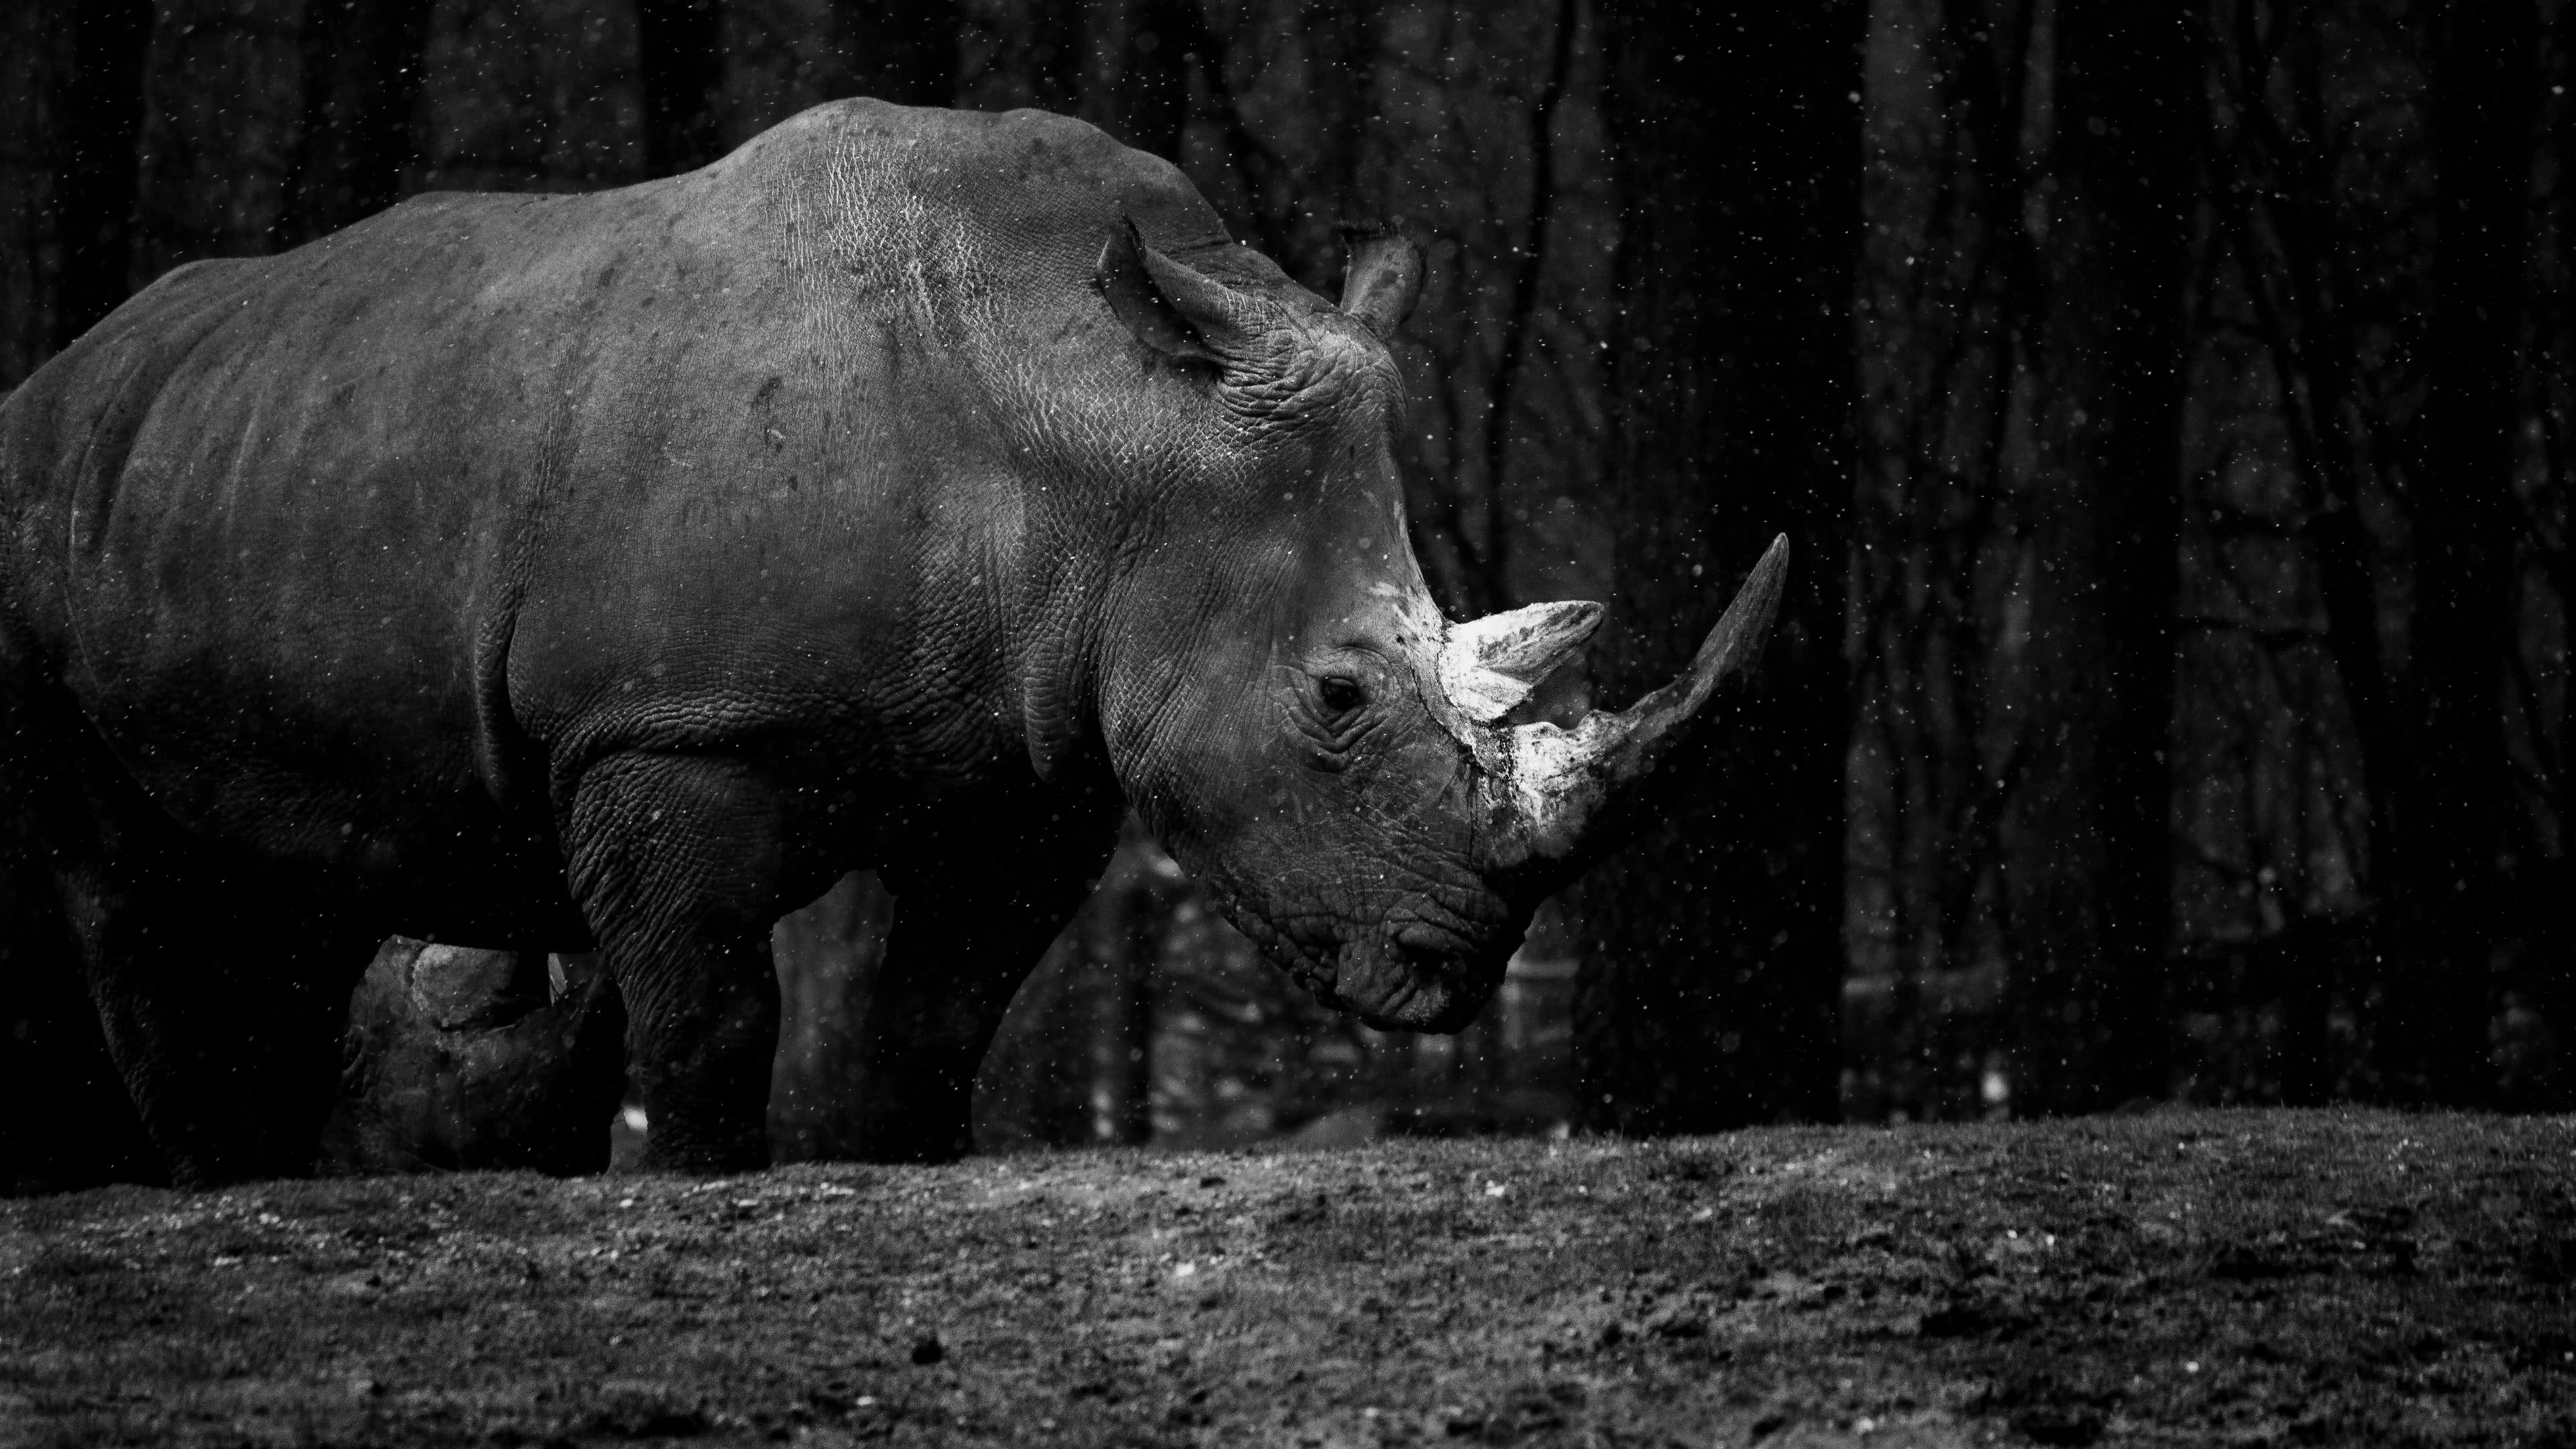 Rhino at Royal Burger's Zoo, 4K UHD wallpaper, Rhino image in ultra HD, Captivating zoo scene, 3840x2160 4K Desktop